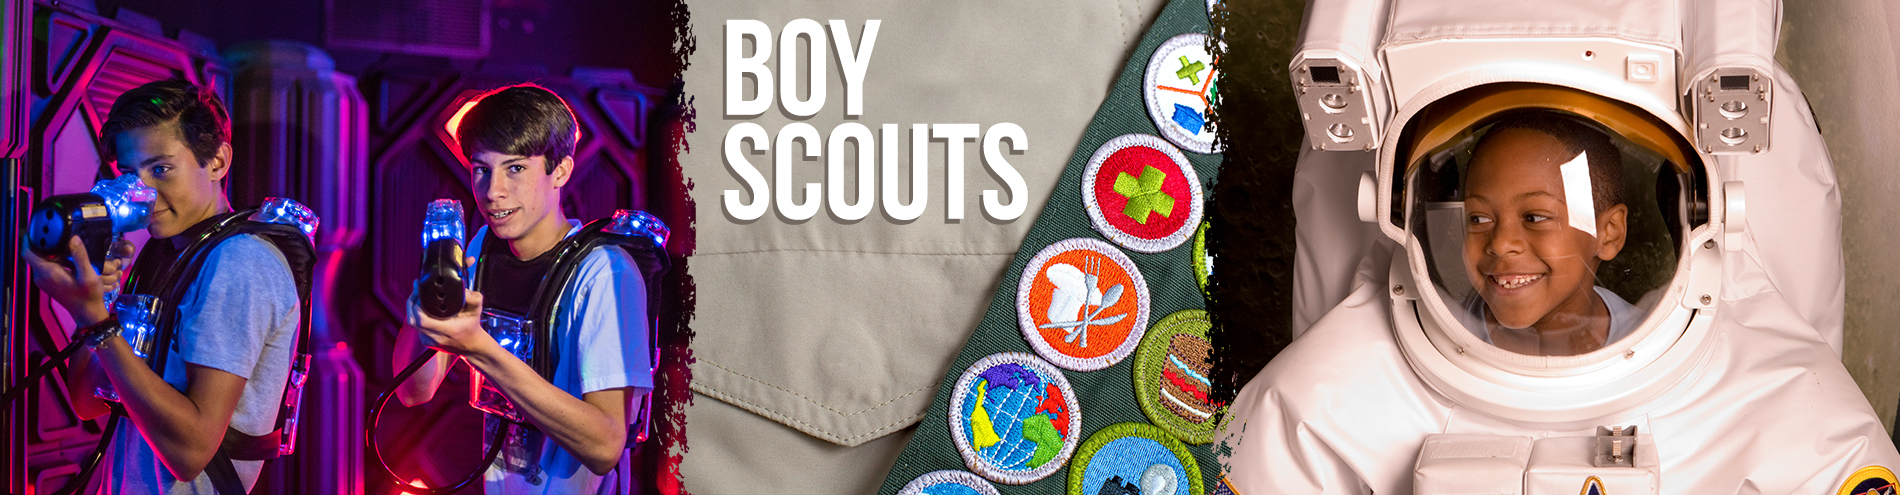 Boy Scouts Header